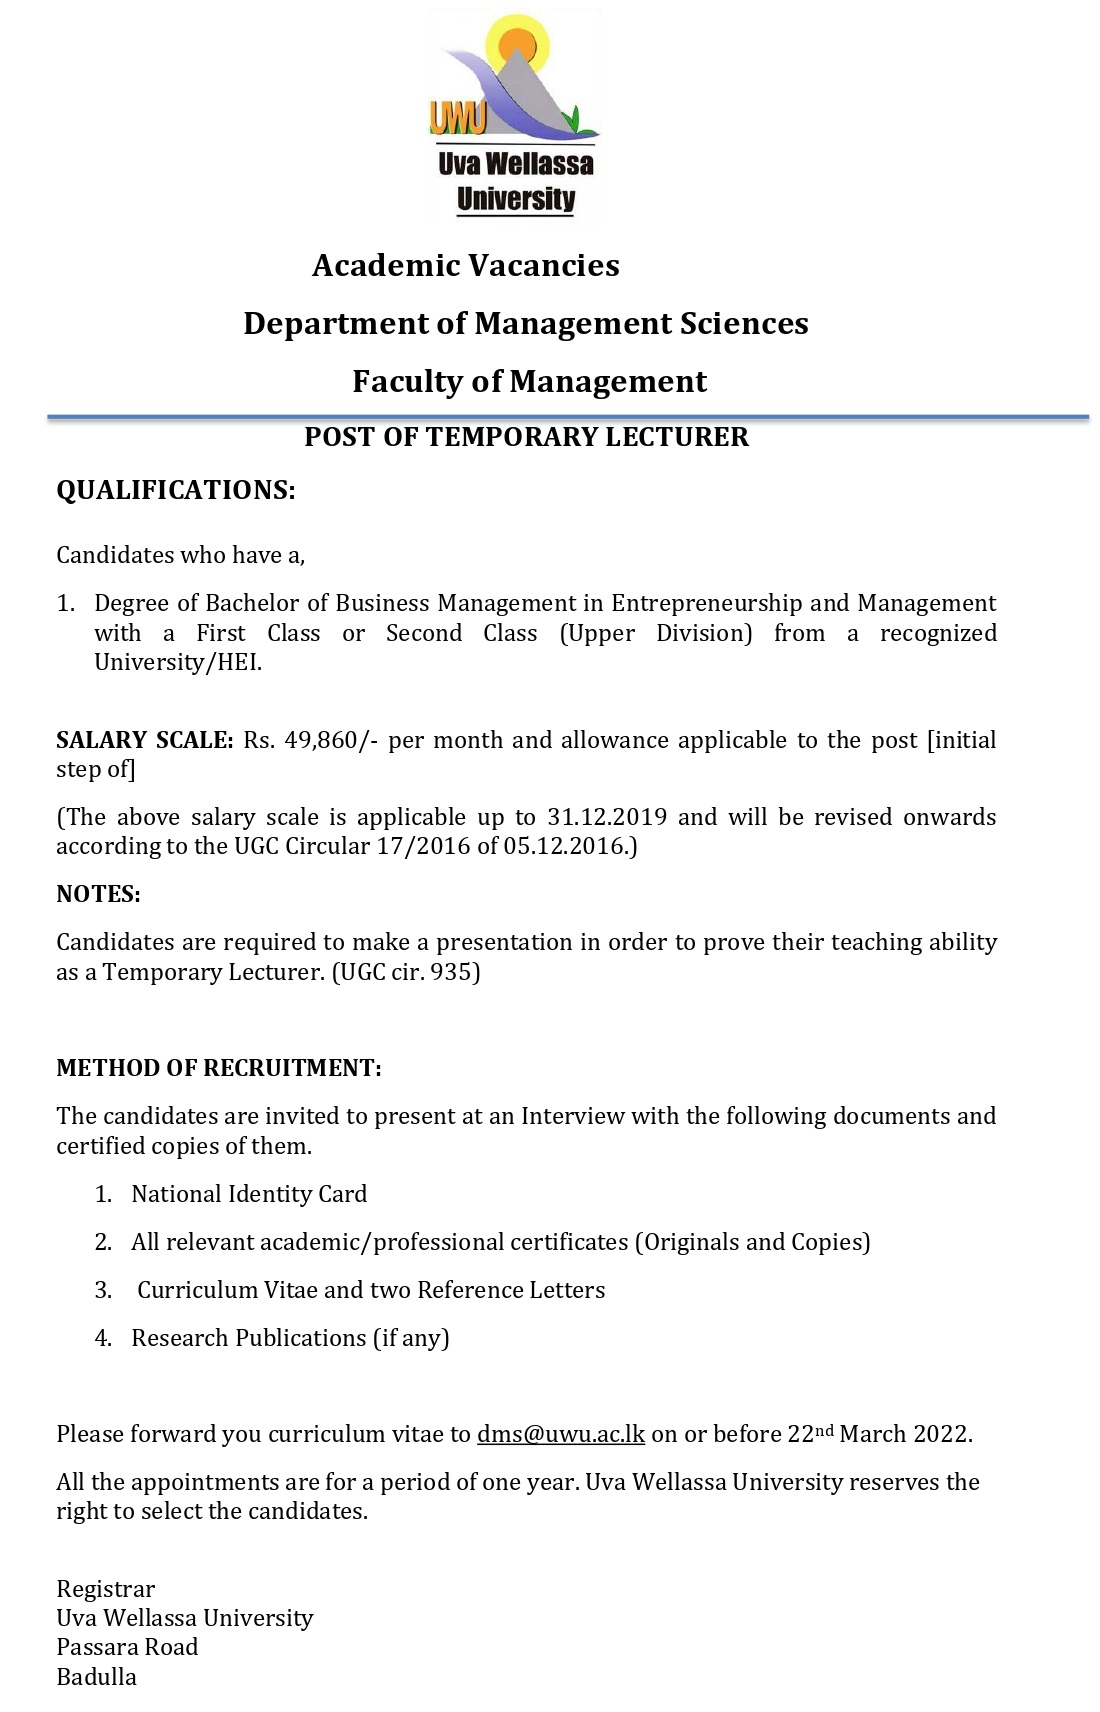 Lecturer Vacancy in Faculty of Management of UVA Wellassa University